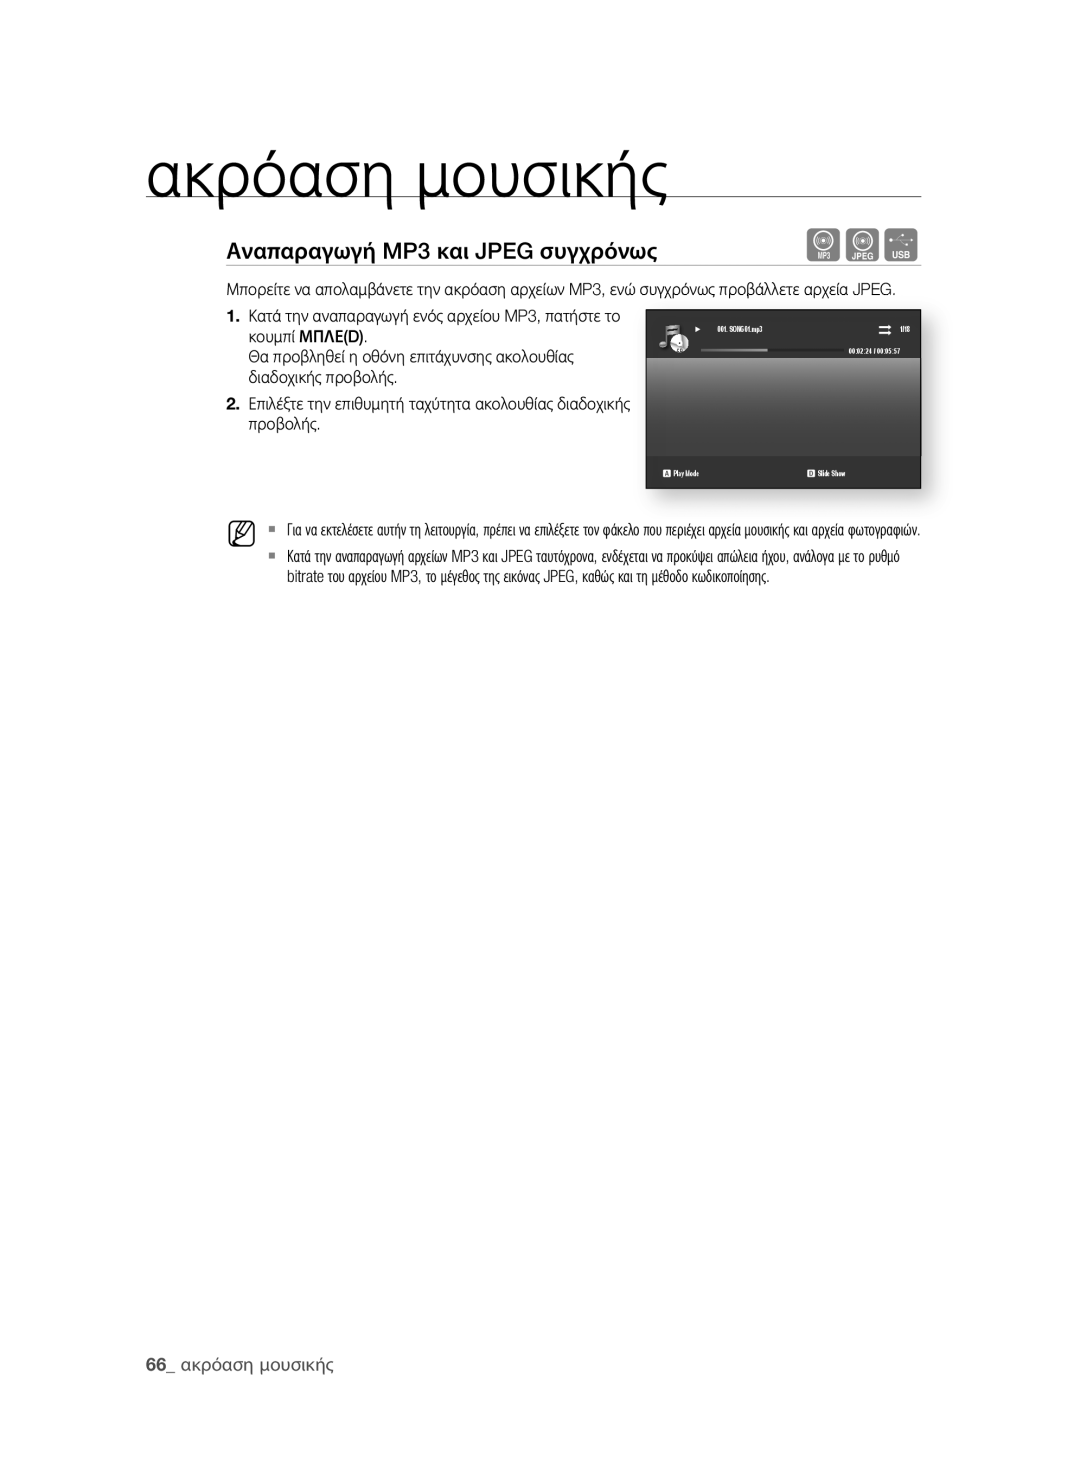 Samsung BD-P1580/EDC manual Αναπαραγωγή MP3 και JPEG συγχρόνως,  ακρόαση μουσικής 